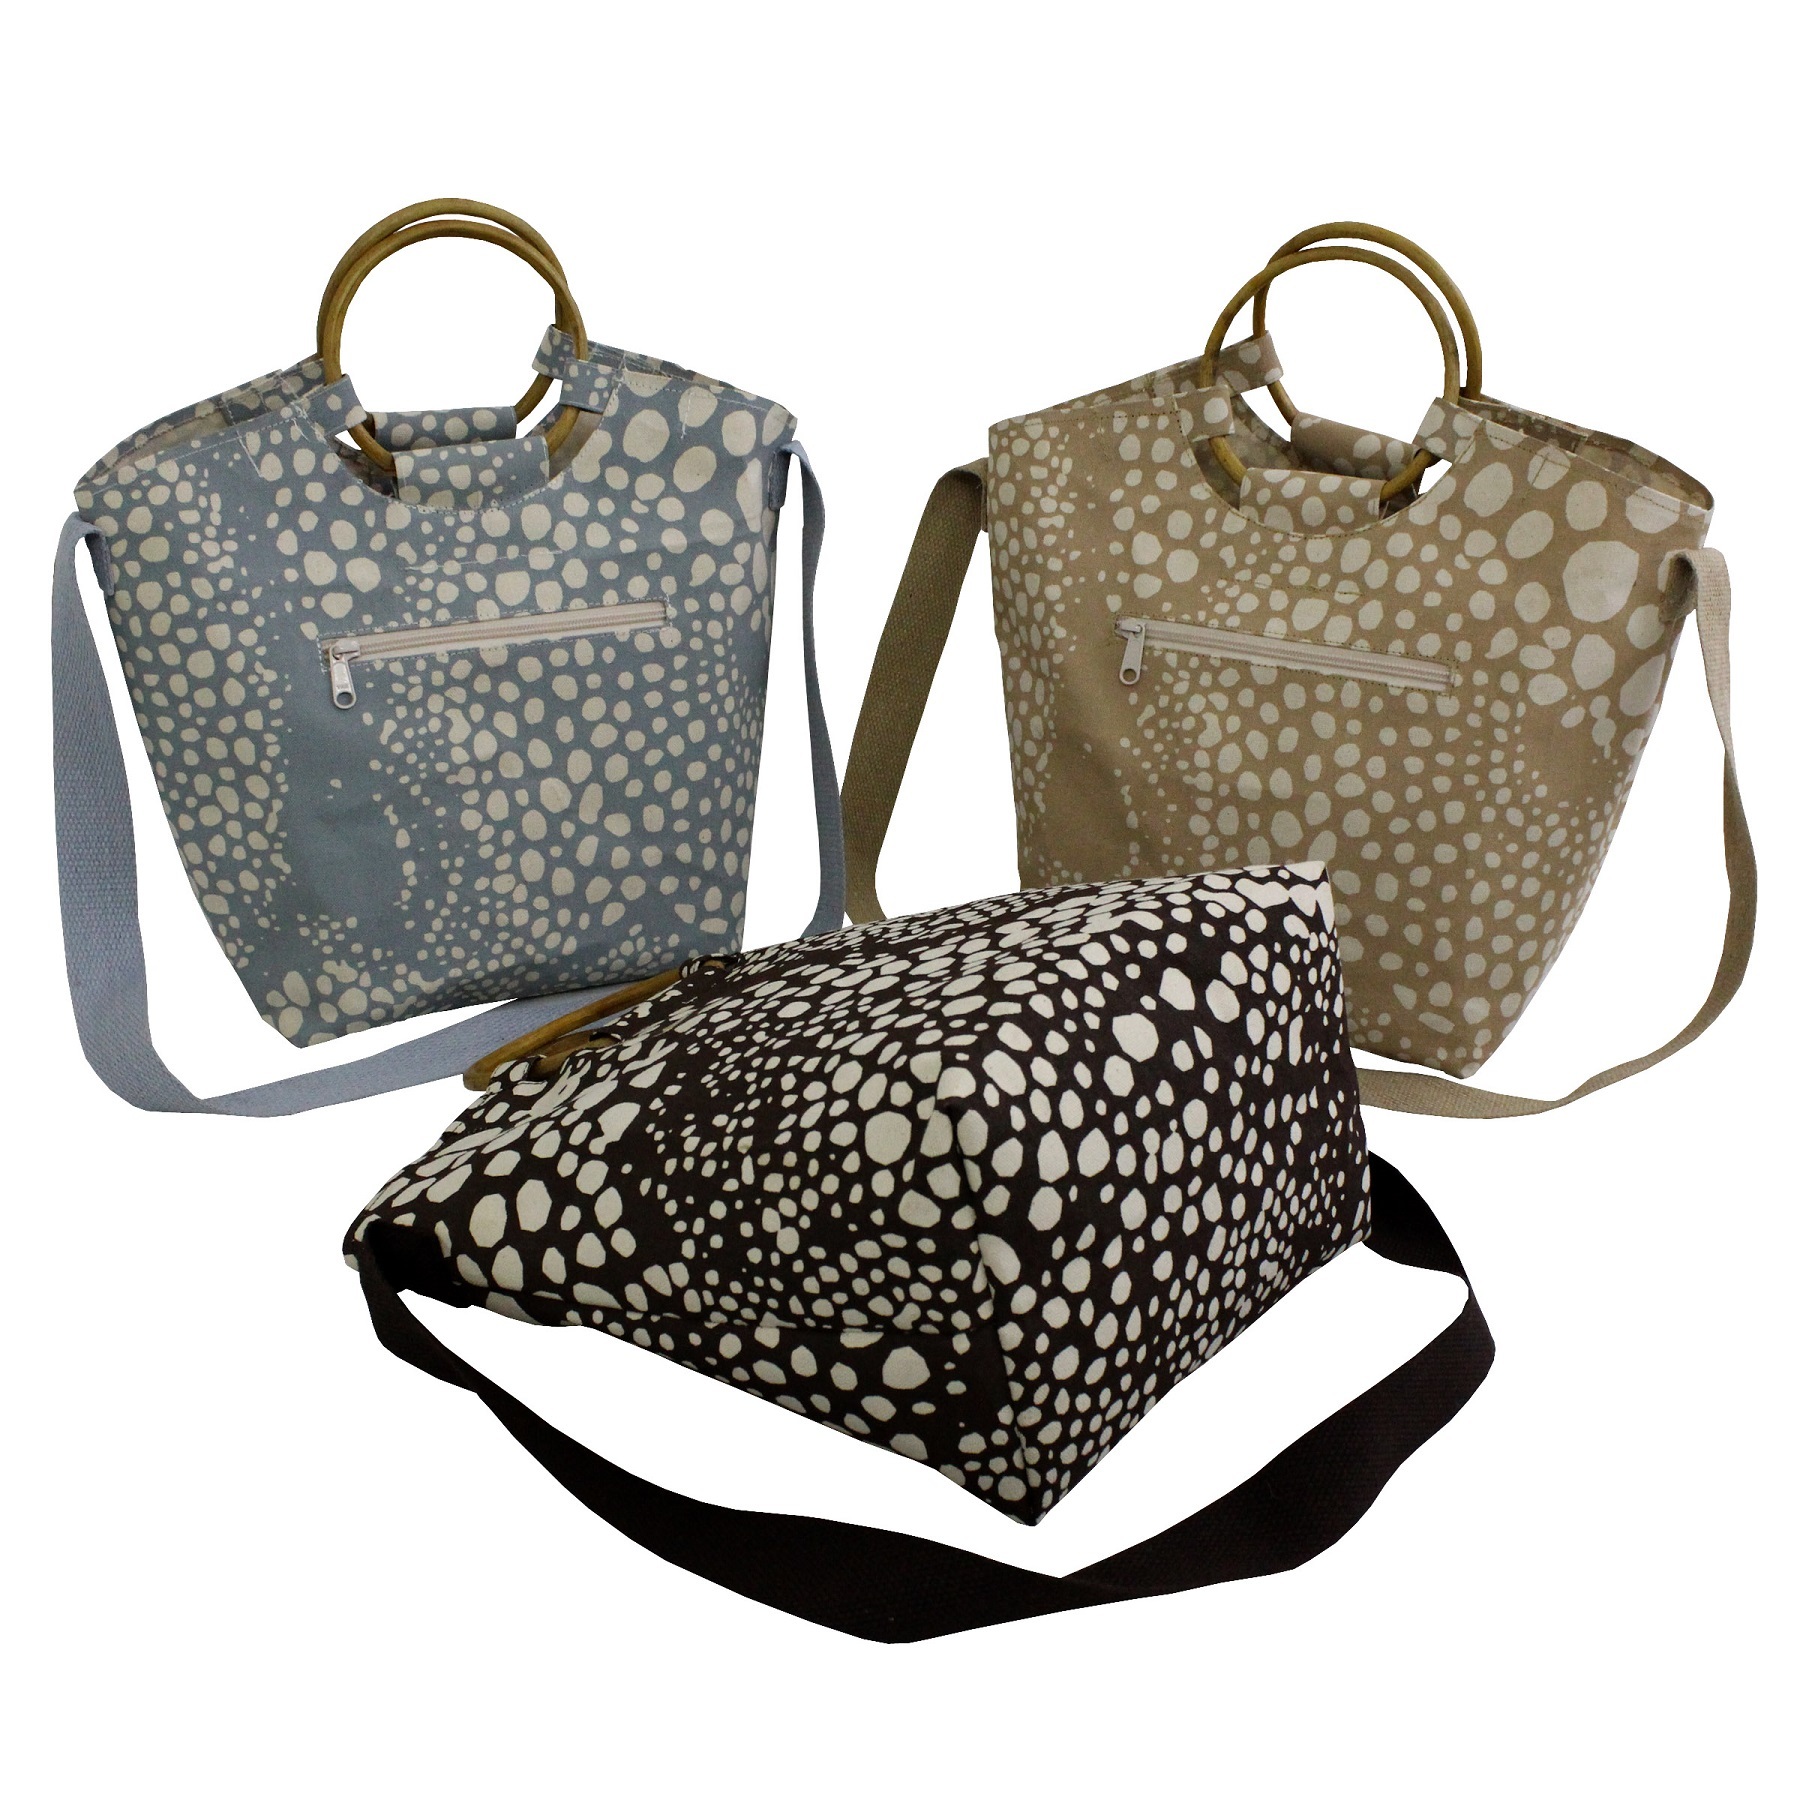 PP Laminated Natural Canvas Shopping Bag With Round Cane Handle & Long webbing Handle